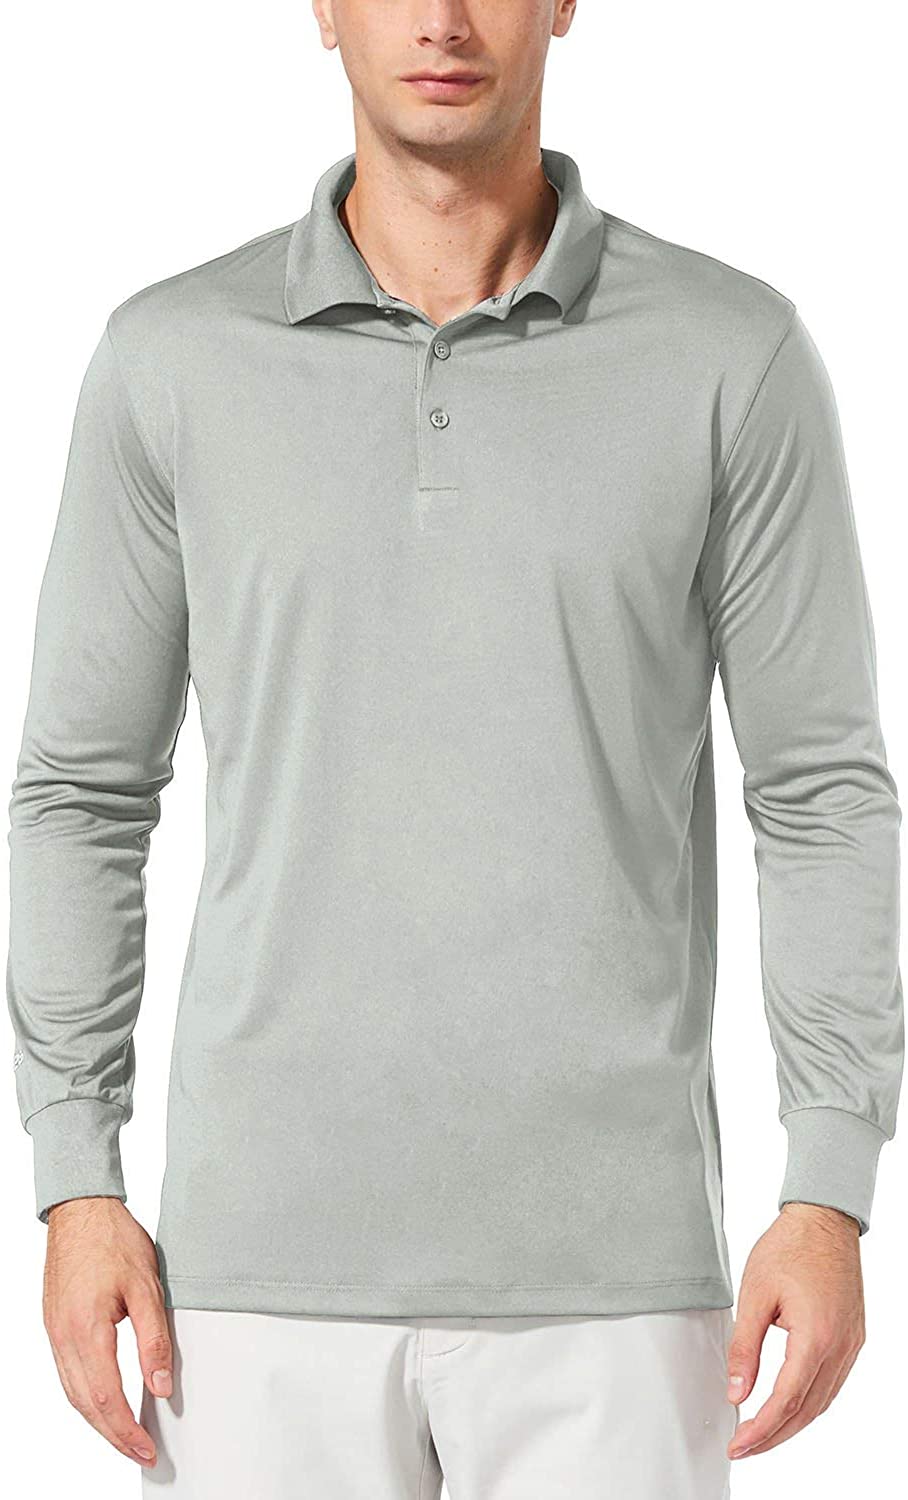 BALEAF Men's UPF 50+ Sun Protection Golf Polo Shirt Long Sleeve Tennis ...